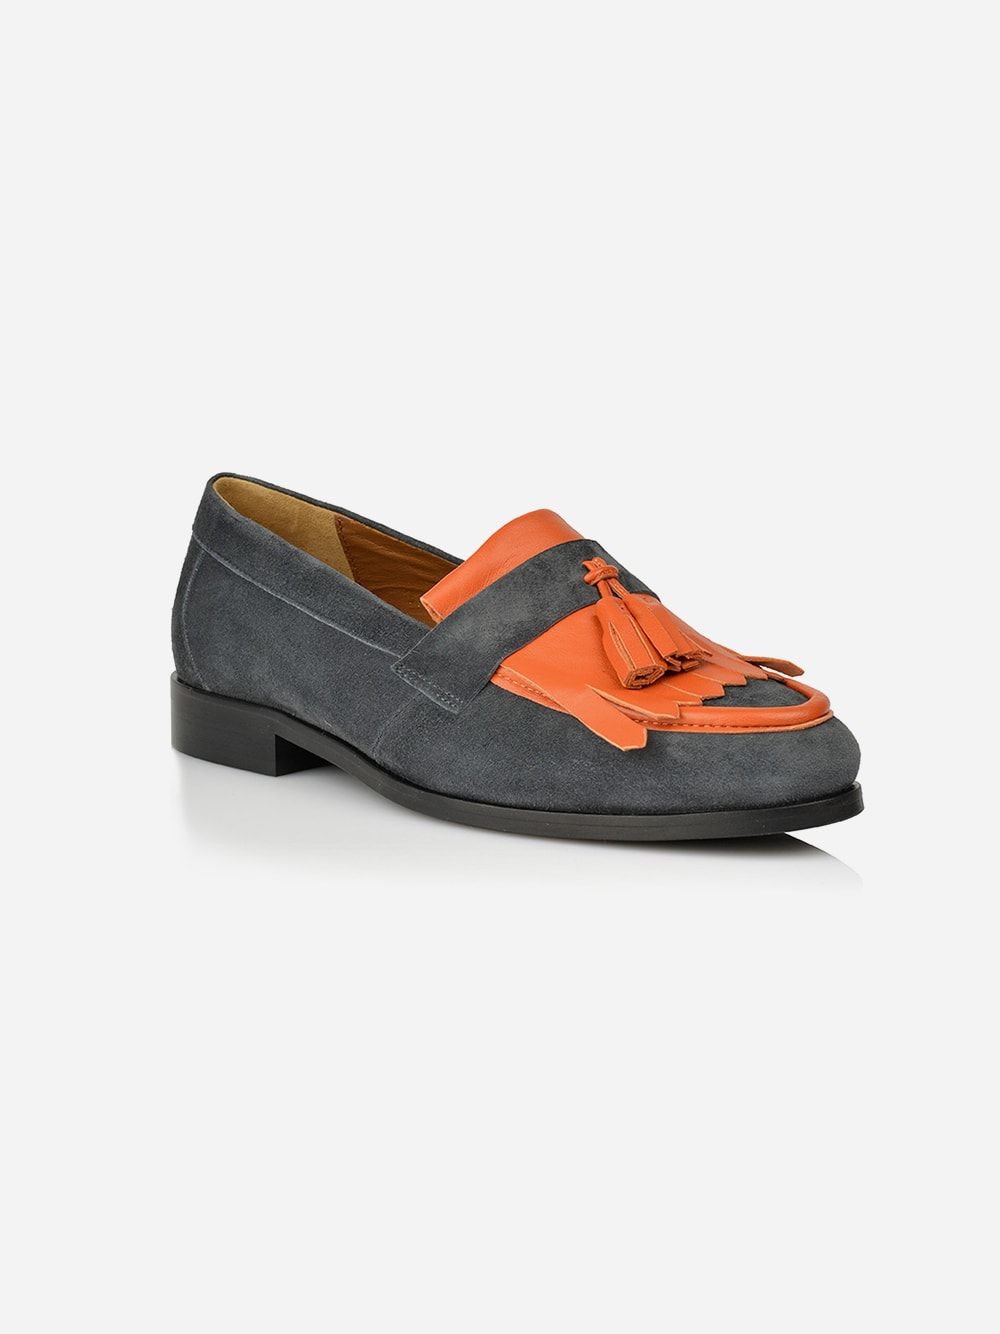 Orange Tassel Loafers | JJ Heitor